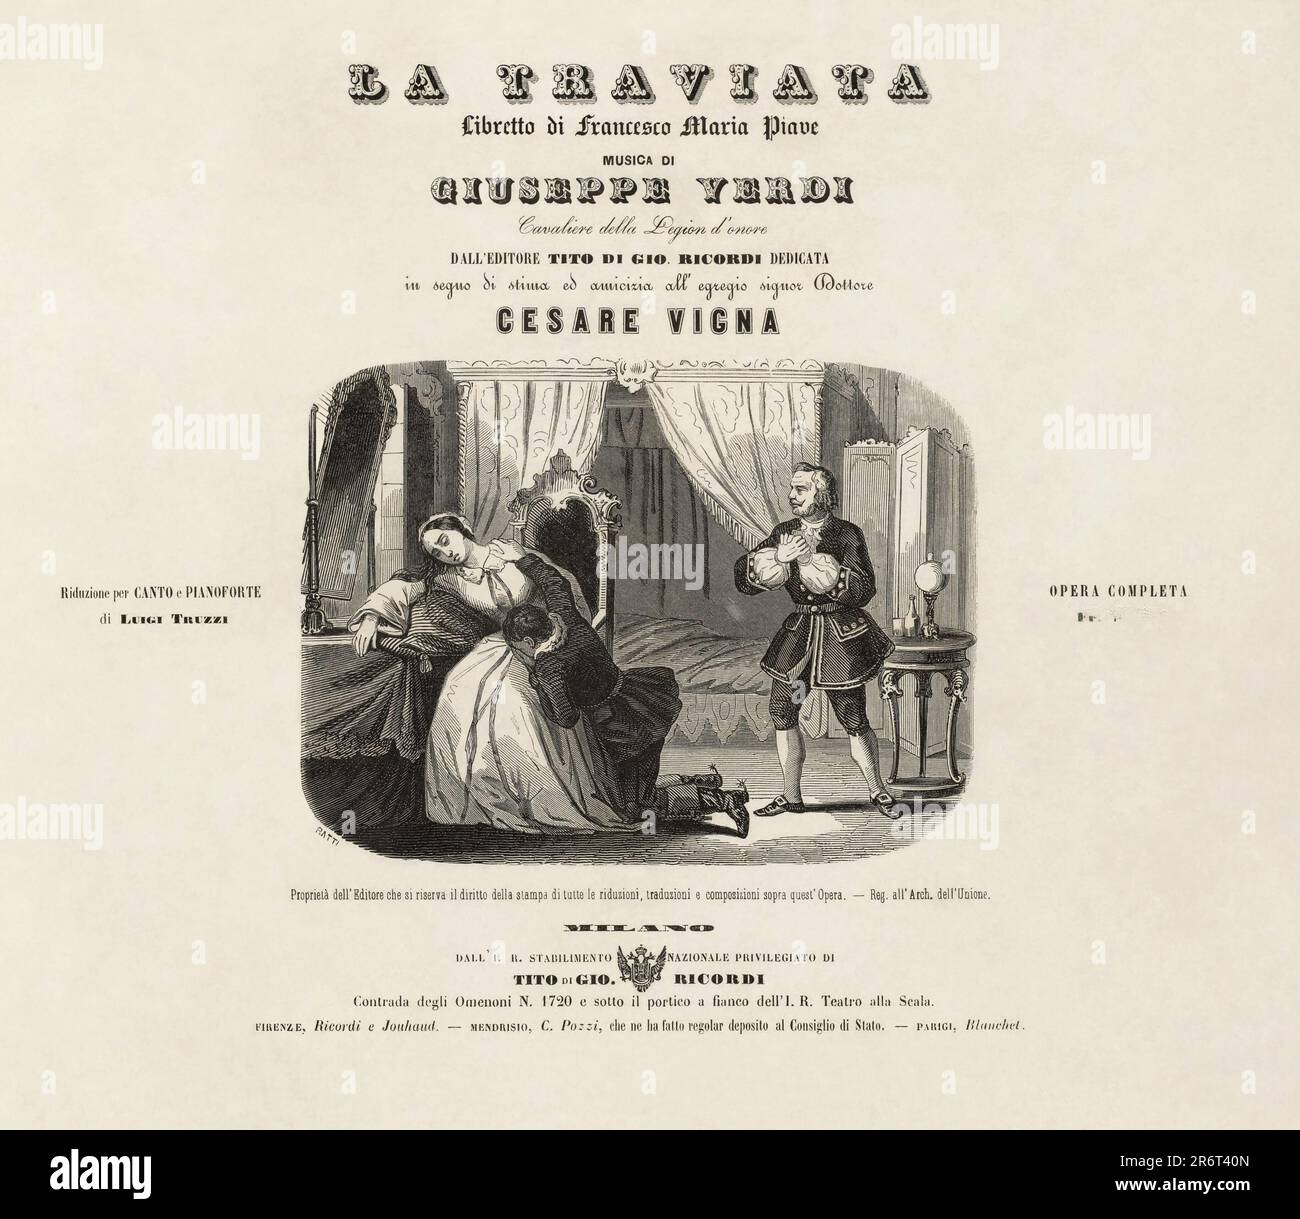 Cover of the first edition of the vocal score of opera La Traviata by Giuseppe Verdi. Museum: PRIVATE COLLECTION. Author: Leopoldo Ratti. Stock Photo